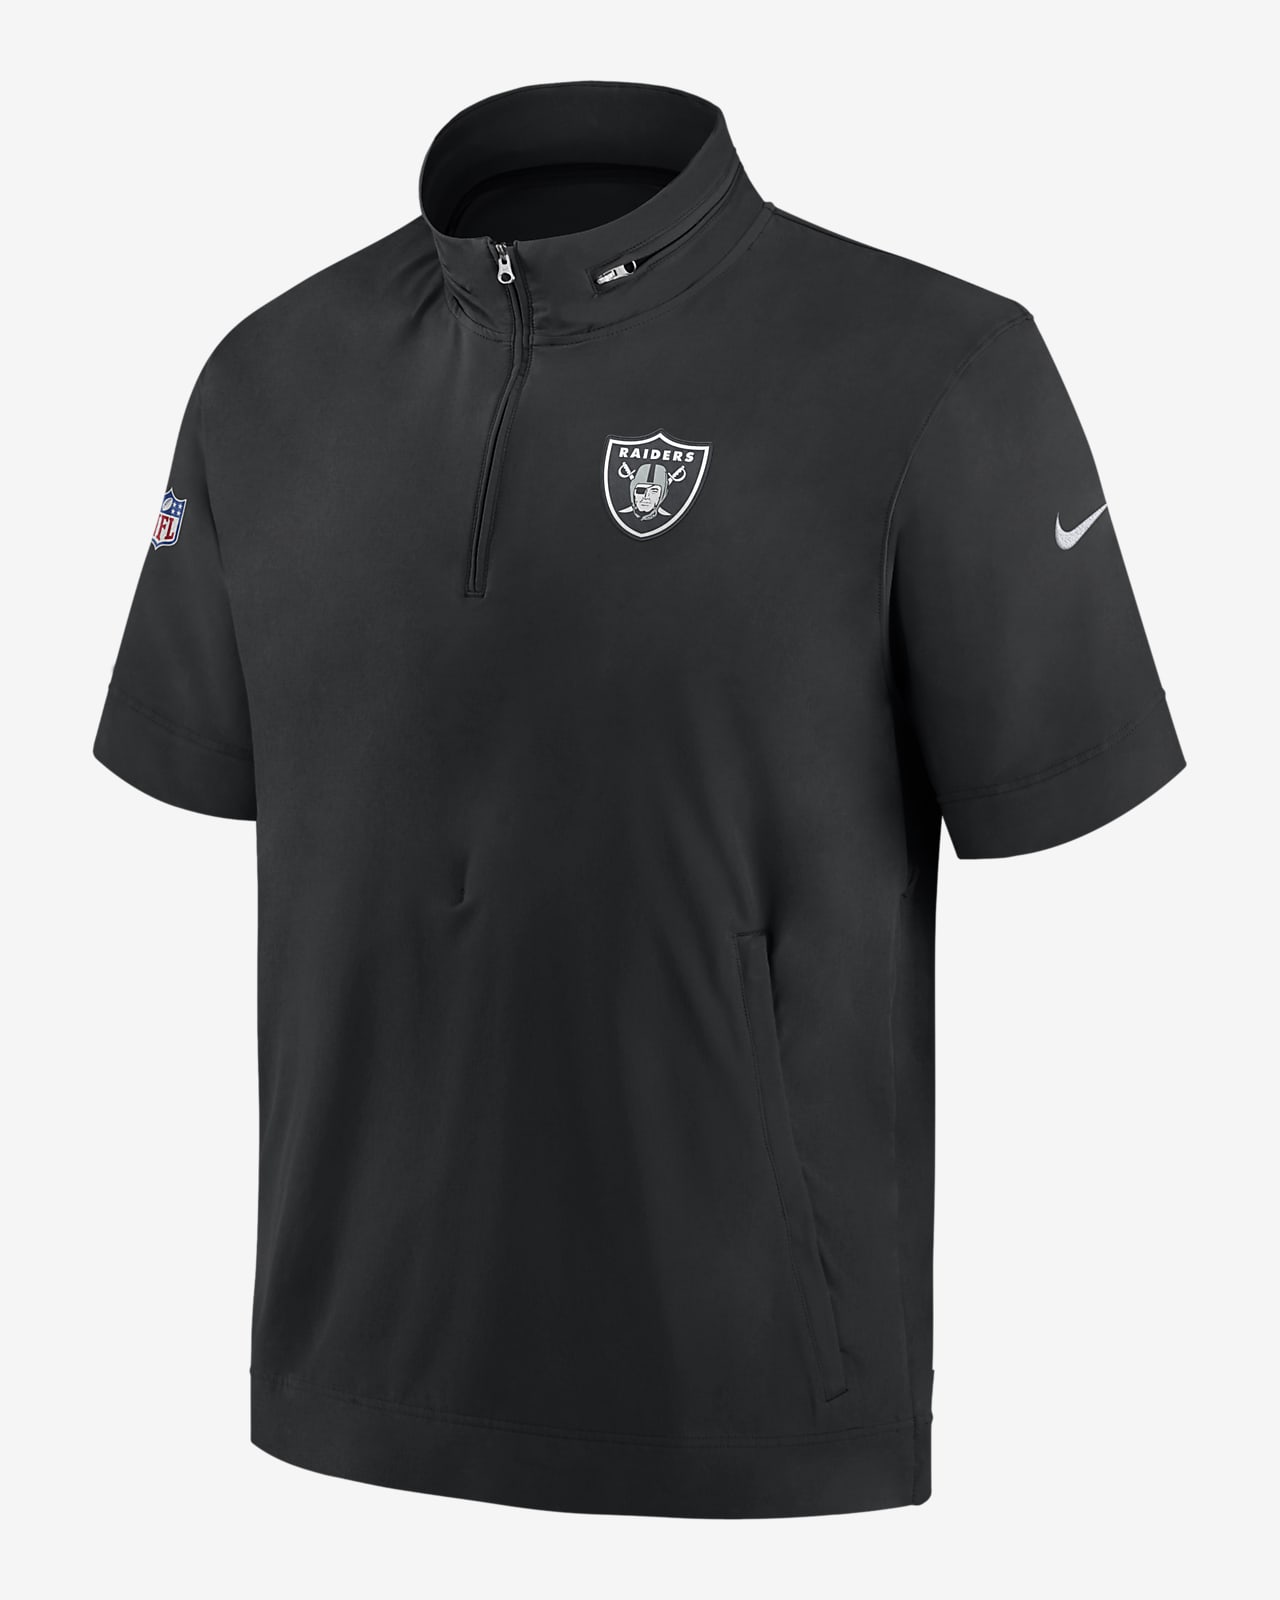 Nike Sideline Coach (NFL Las Vegas Raiders) Men's Short-Sleeve Jacket